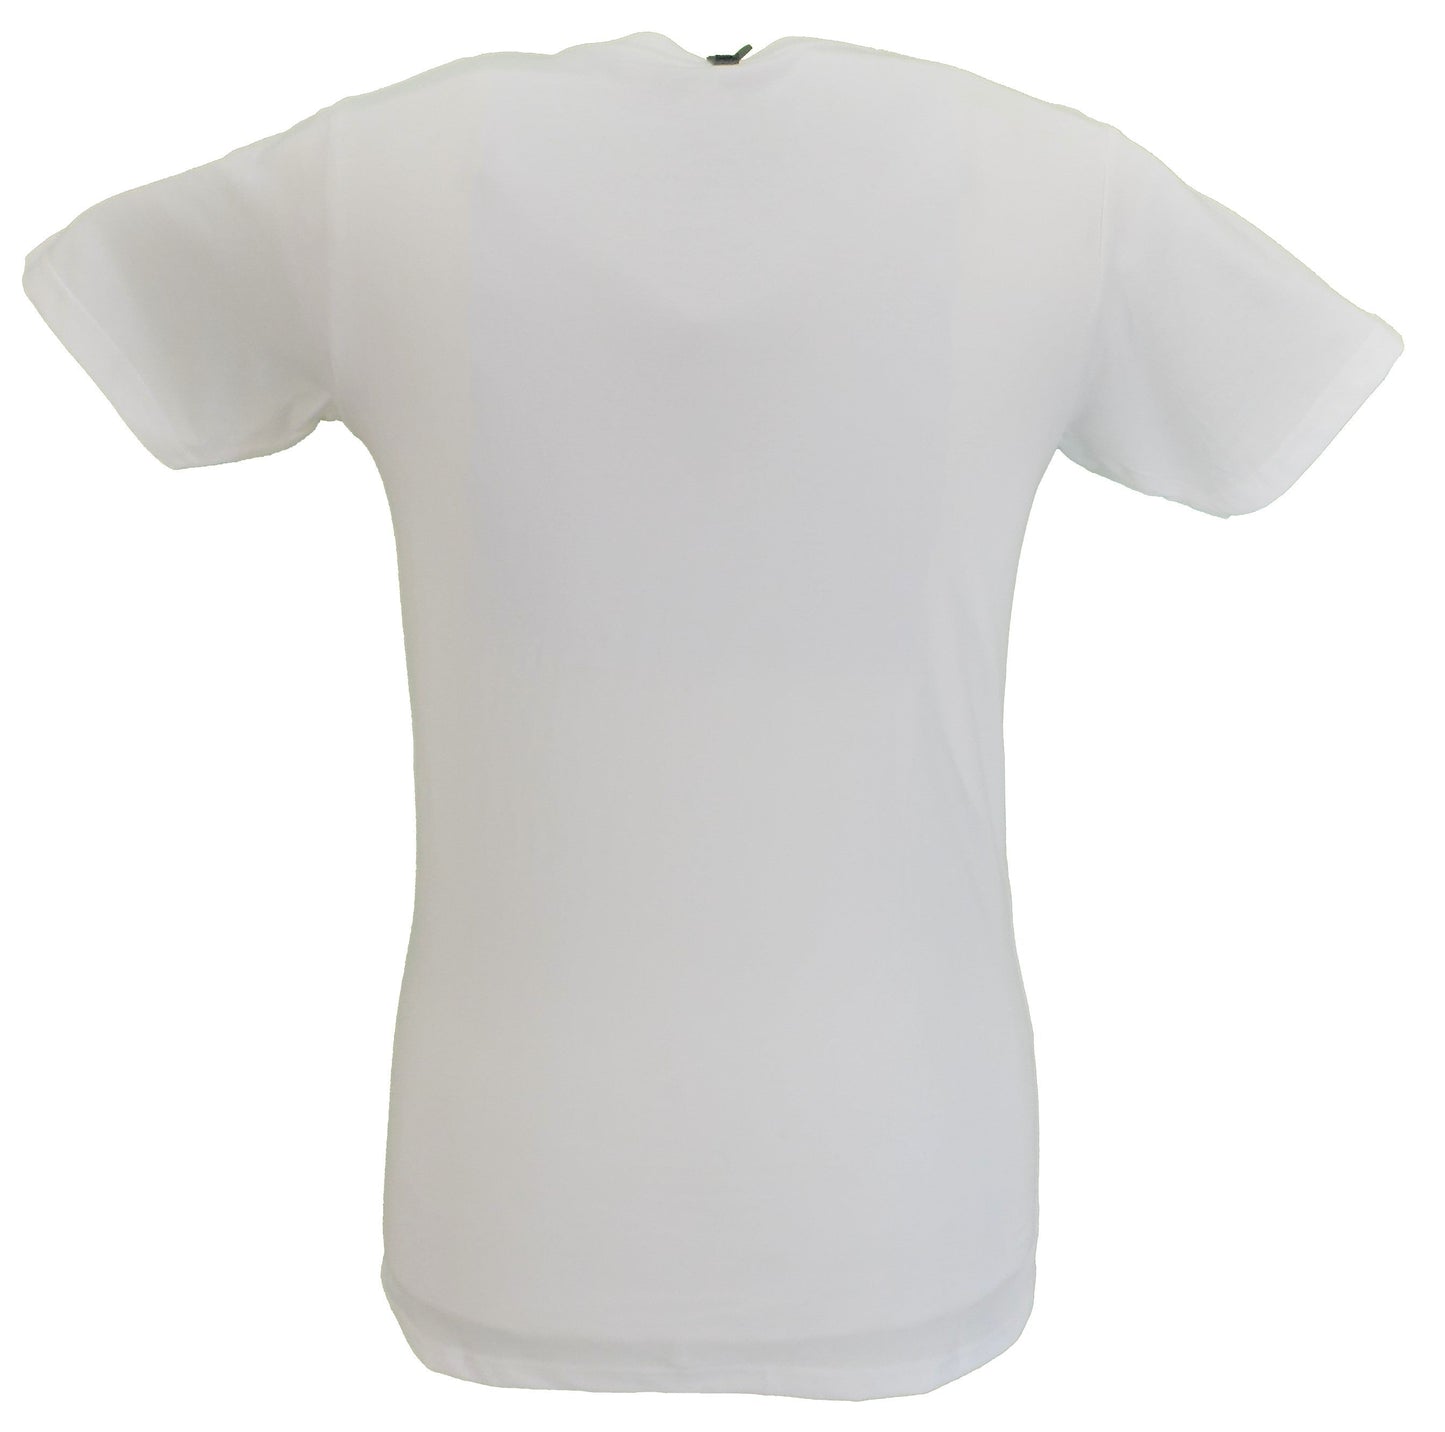 Mens White Official Paul Weller T Shirt